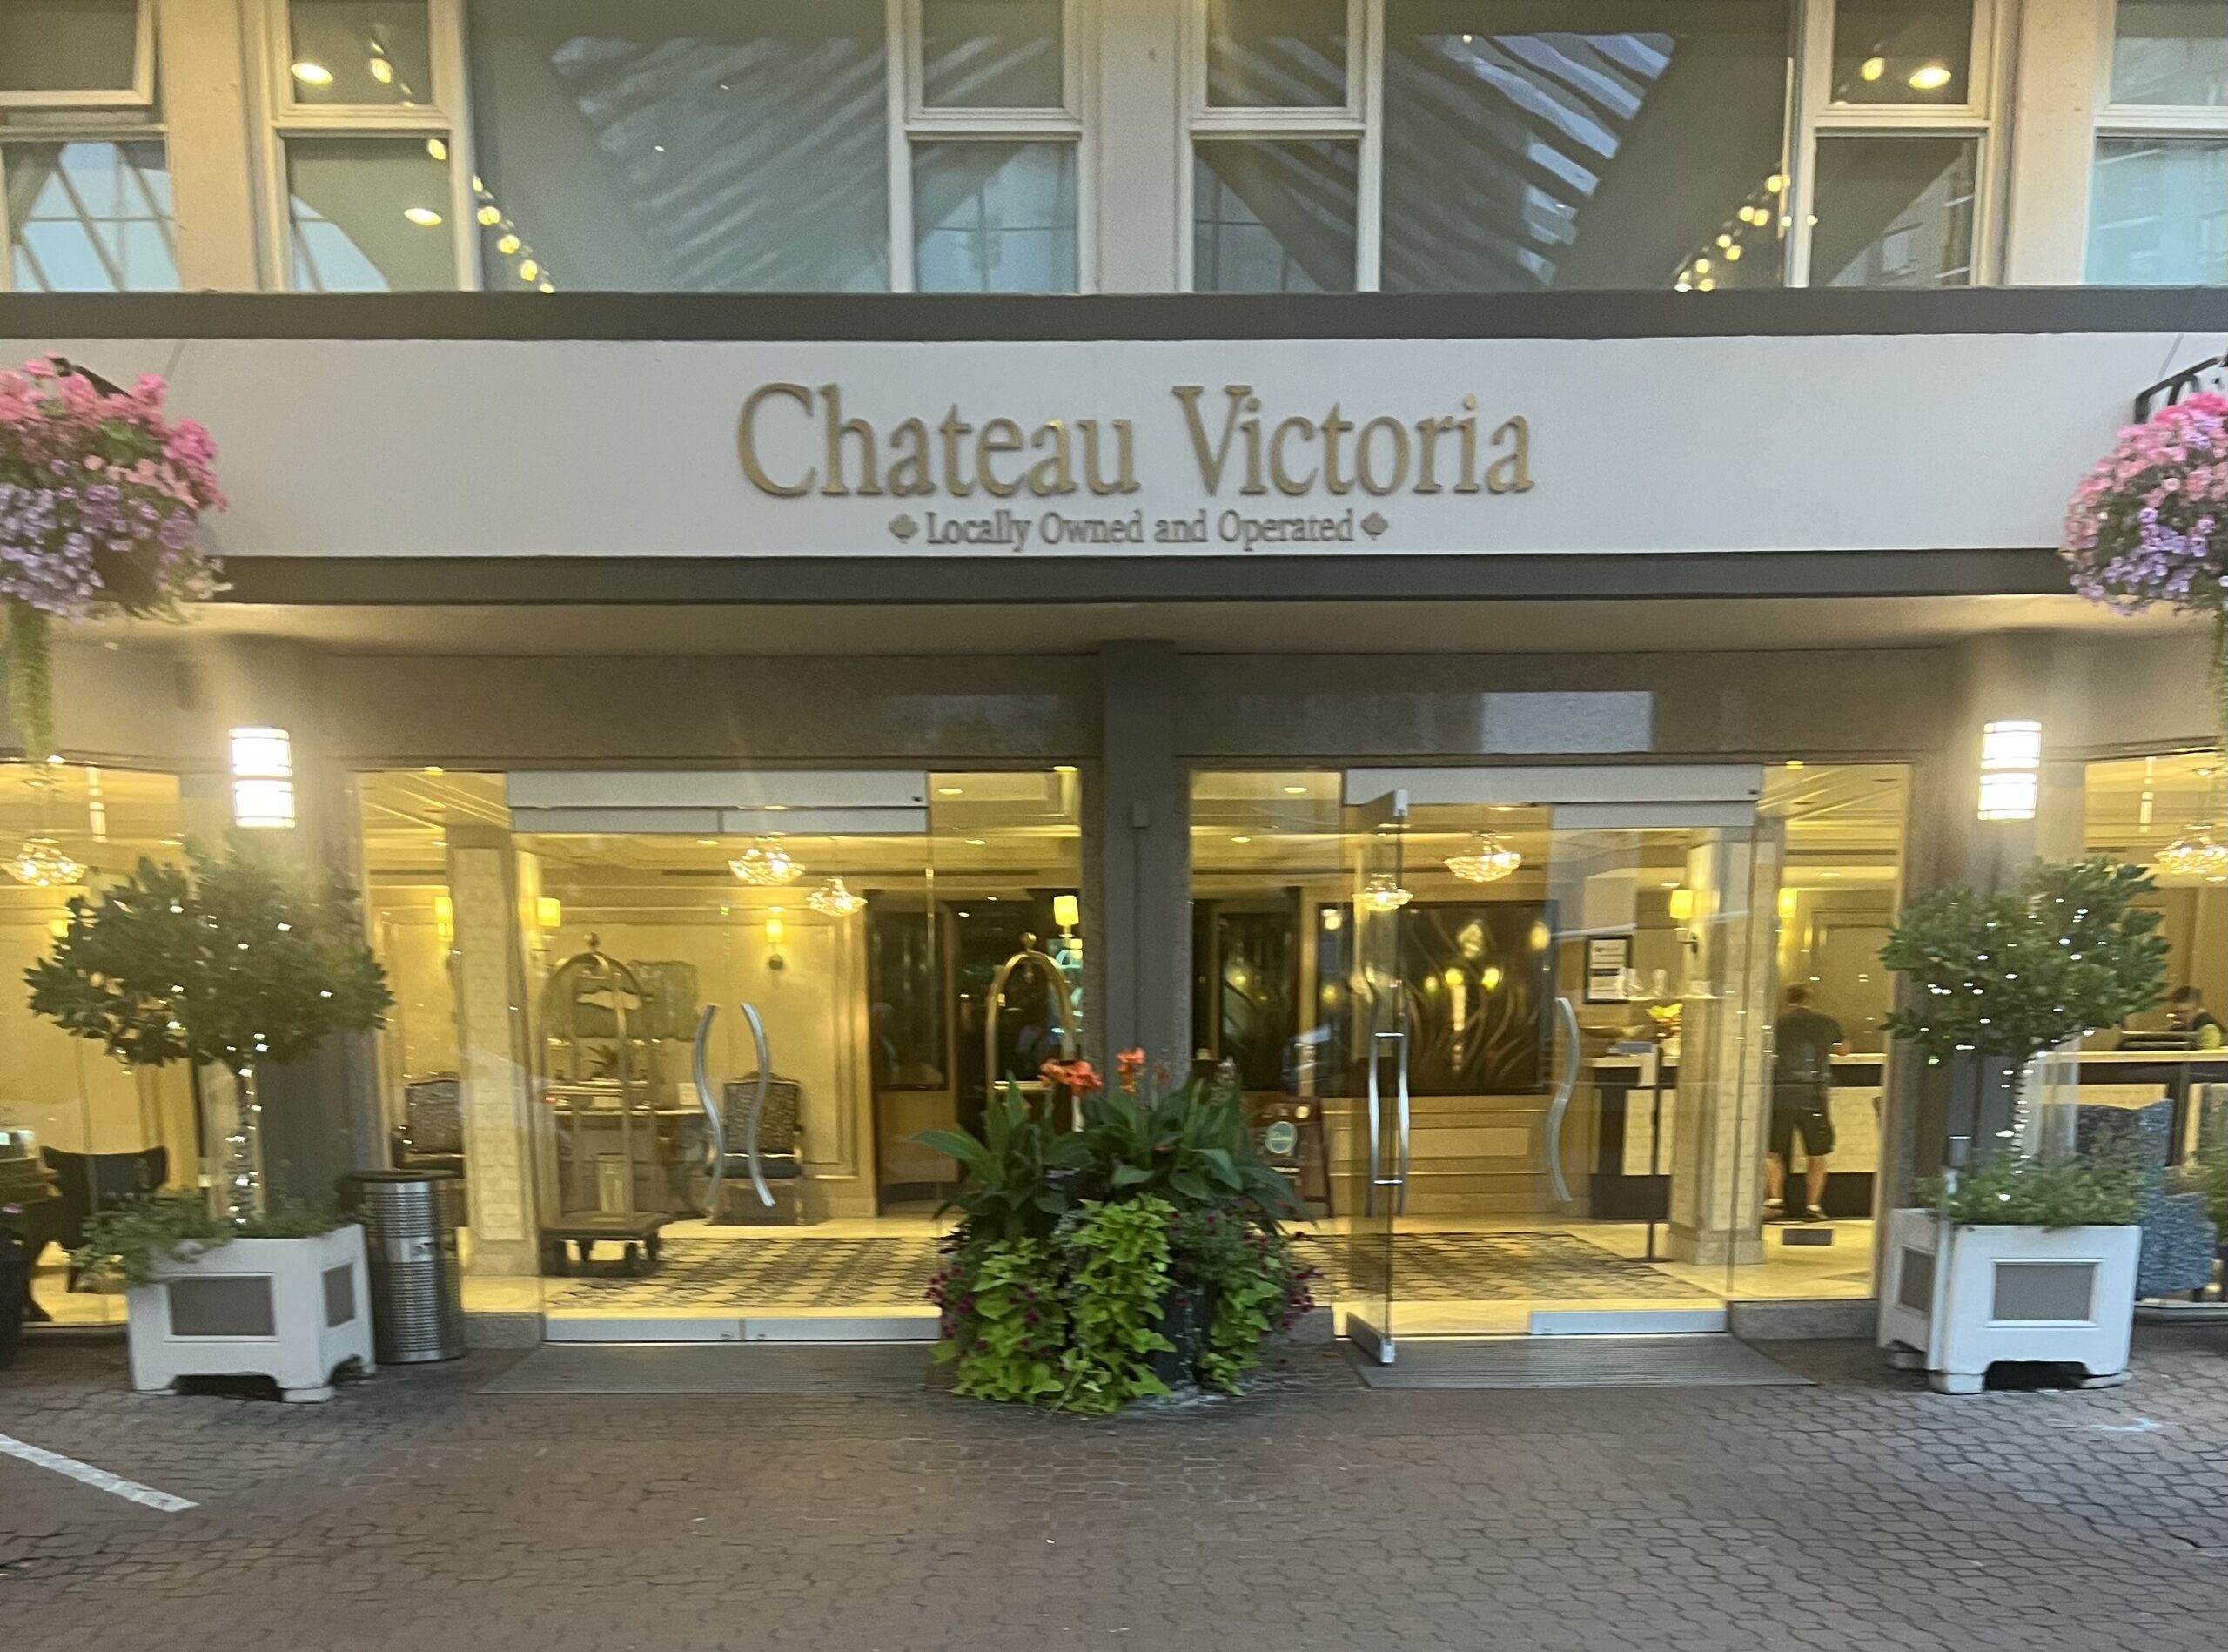 Our hotel in Victoria, B.C. Chateau Victoria